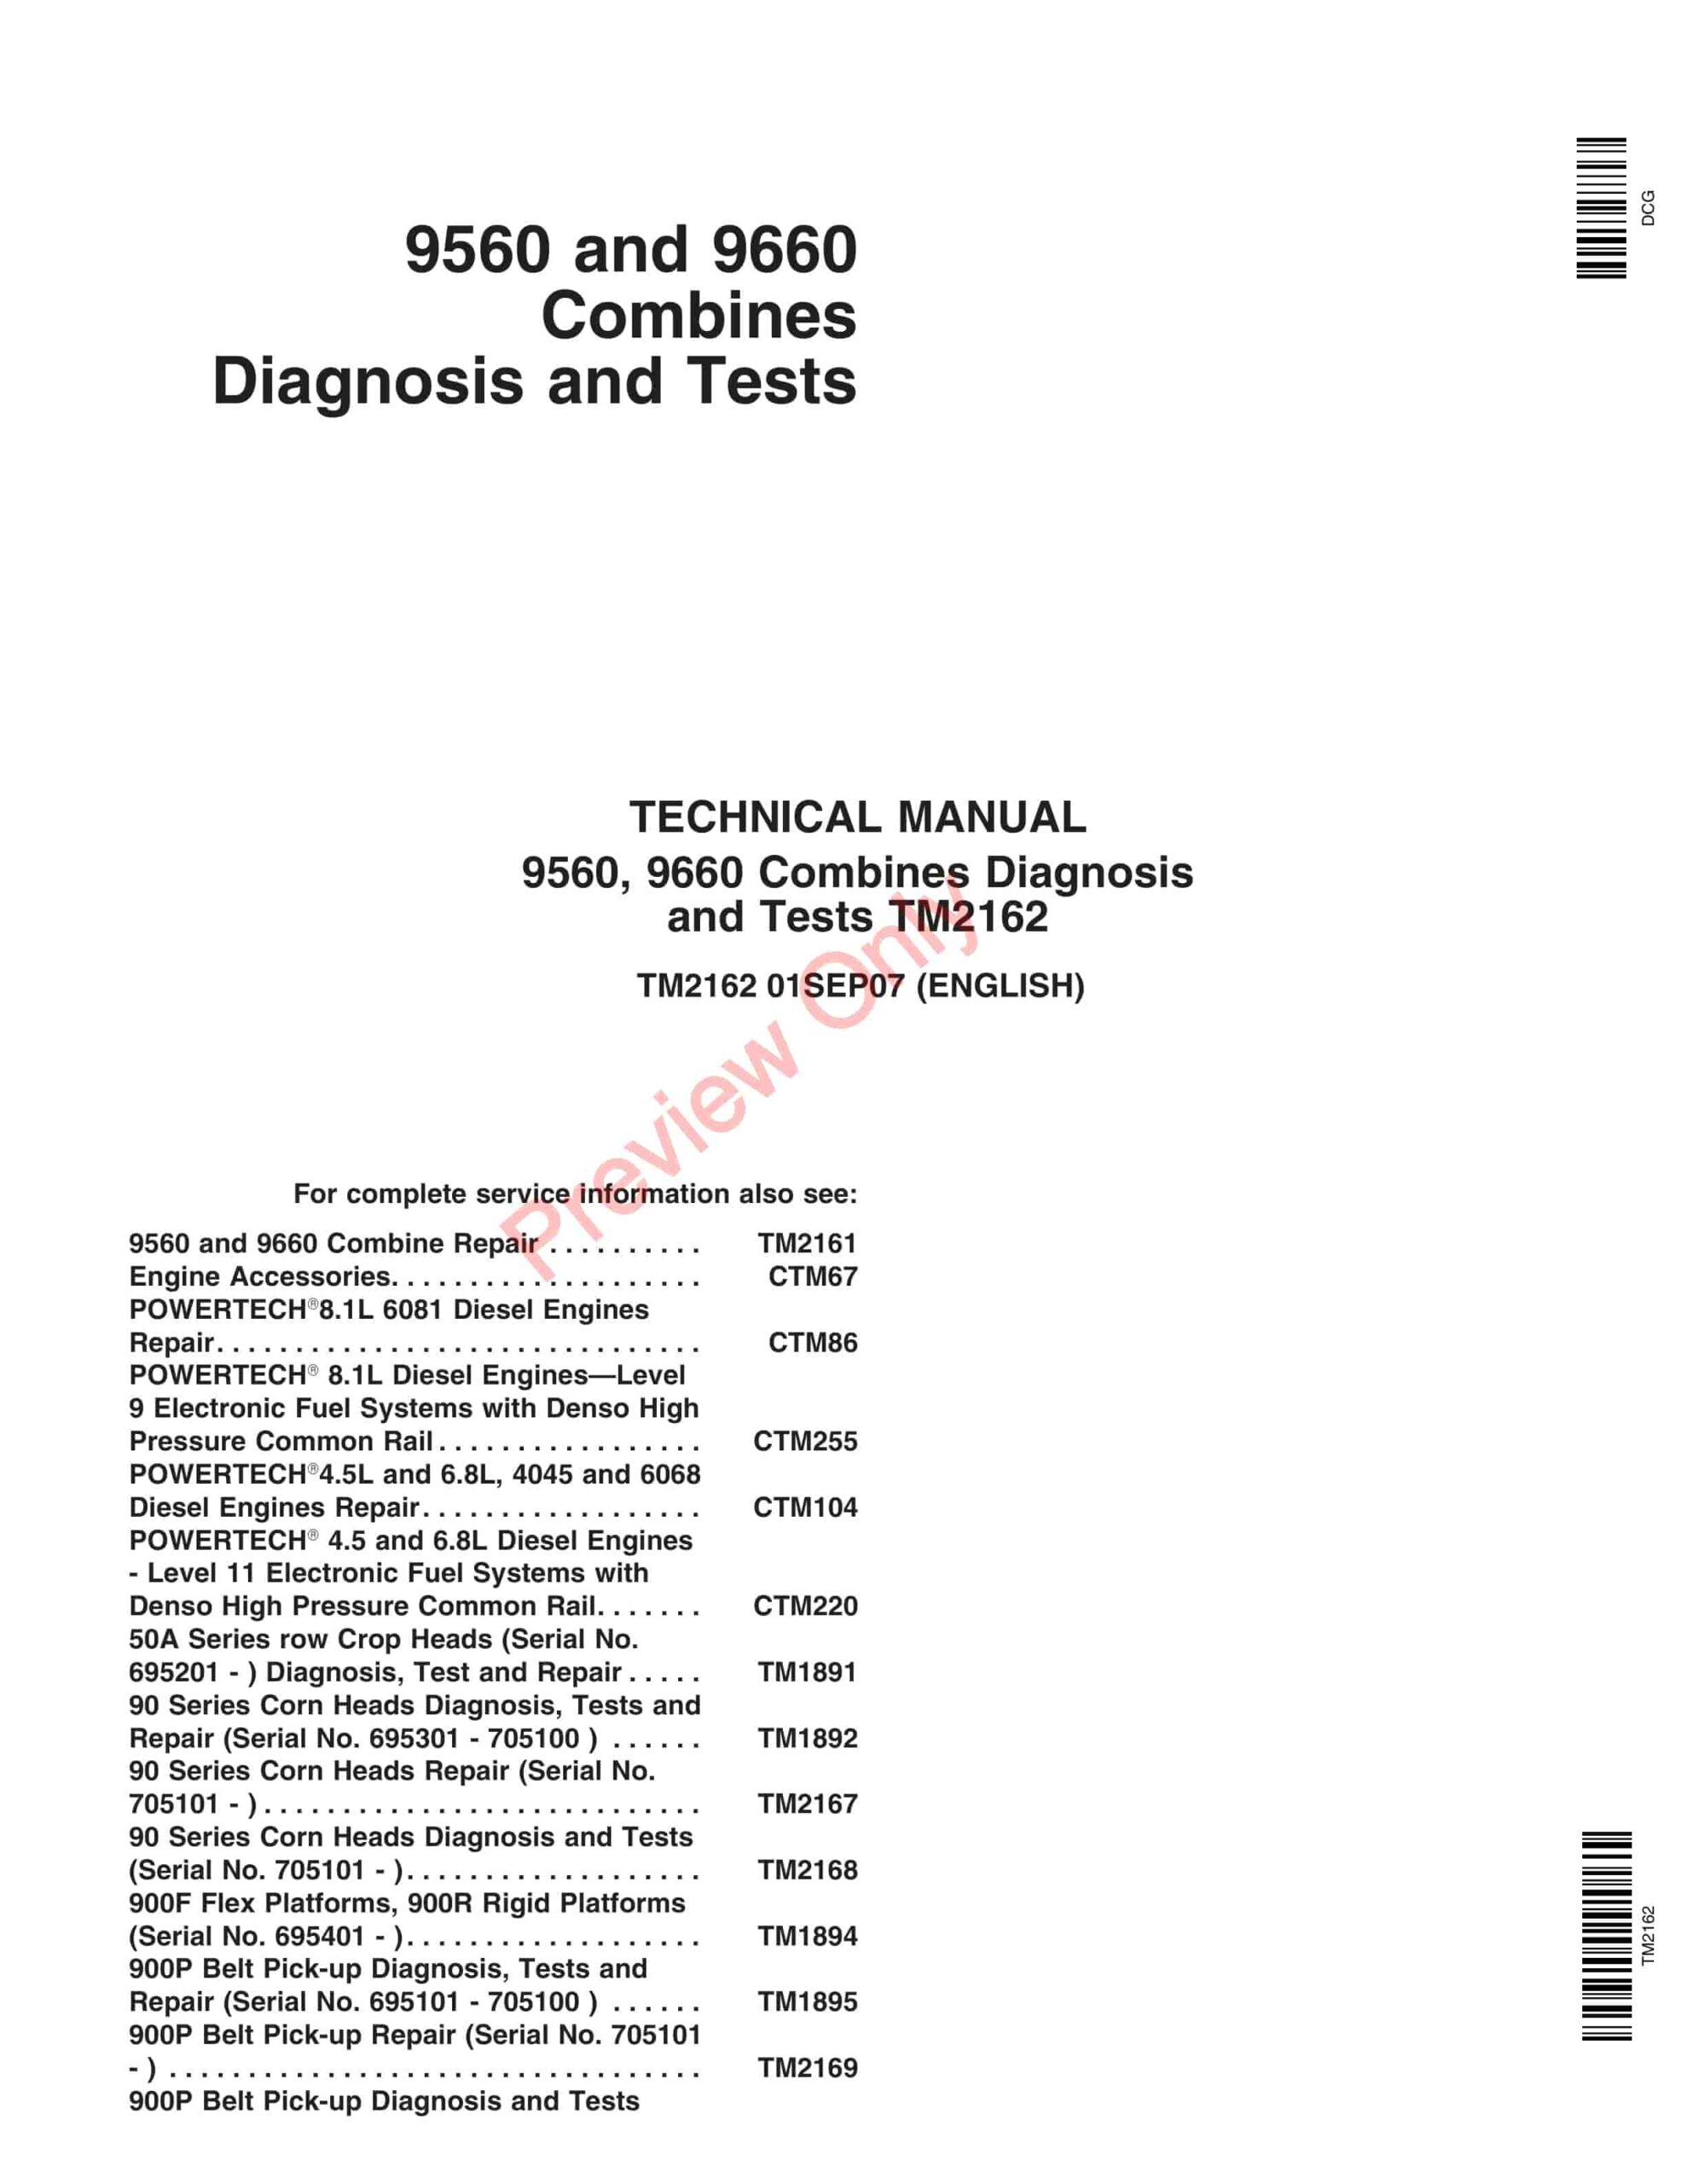 John Deere 9560, 9660 Combines Technical Manual TM2162 01SEP07-1